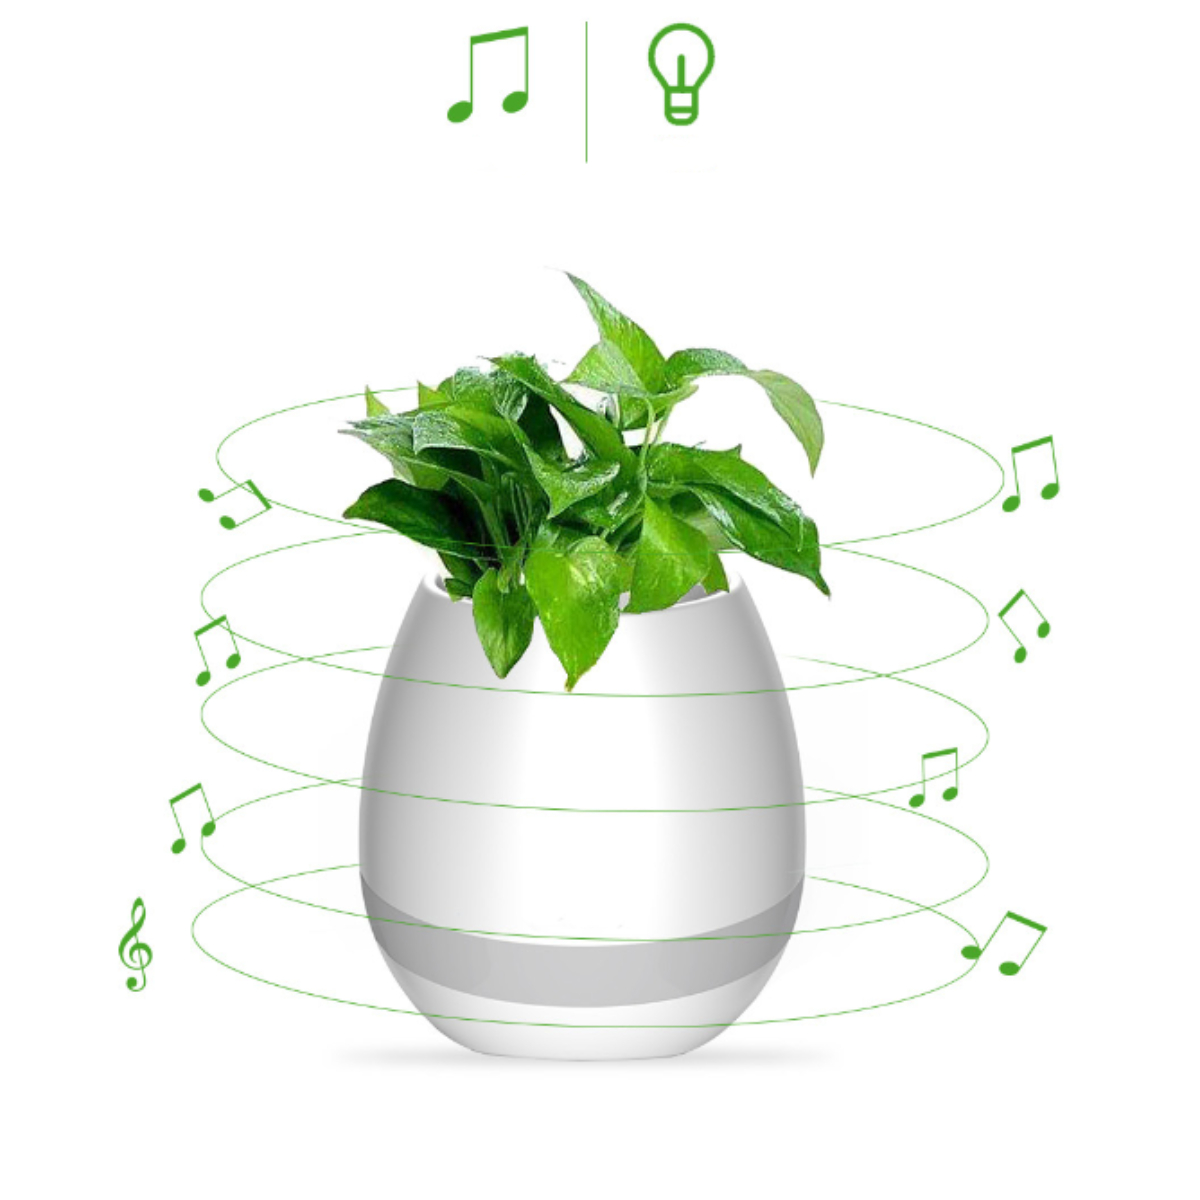 Rosa Nacht Eierschalenform Bluetooth-Lautsprecher, Bluetooth-Lautsprecher BYTELIKE mit mit für die Musiksteuerung, Farblicht